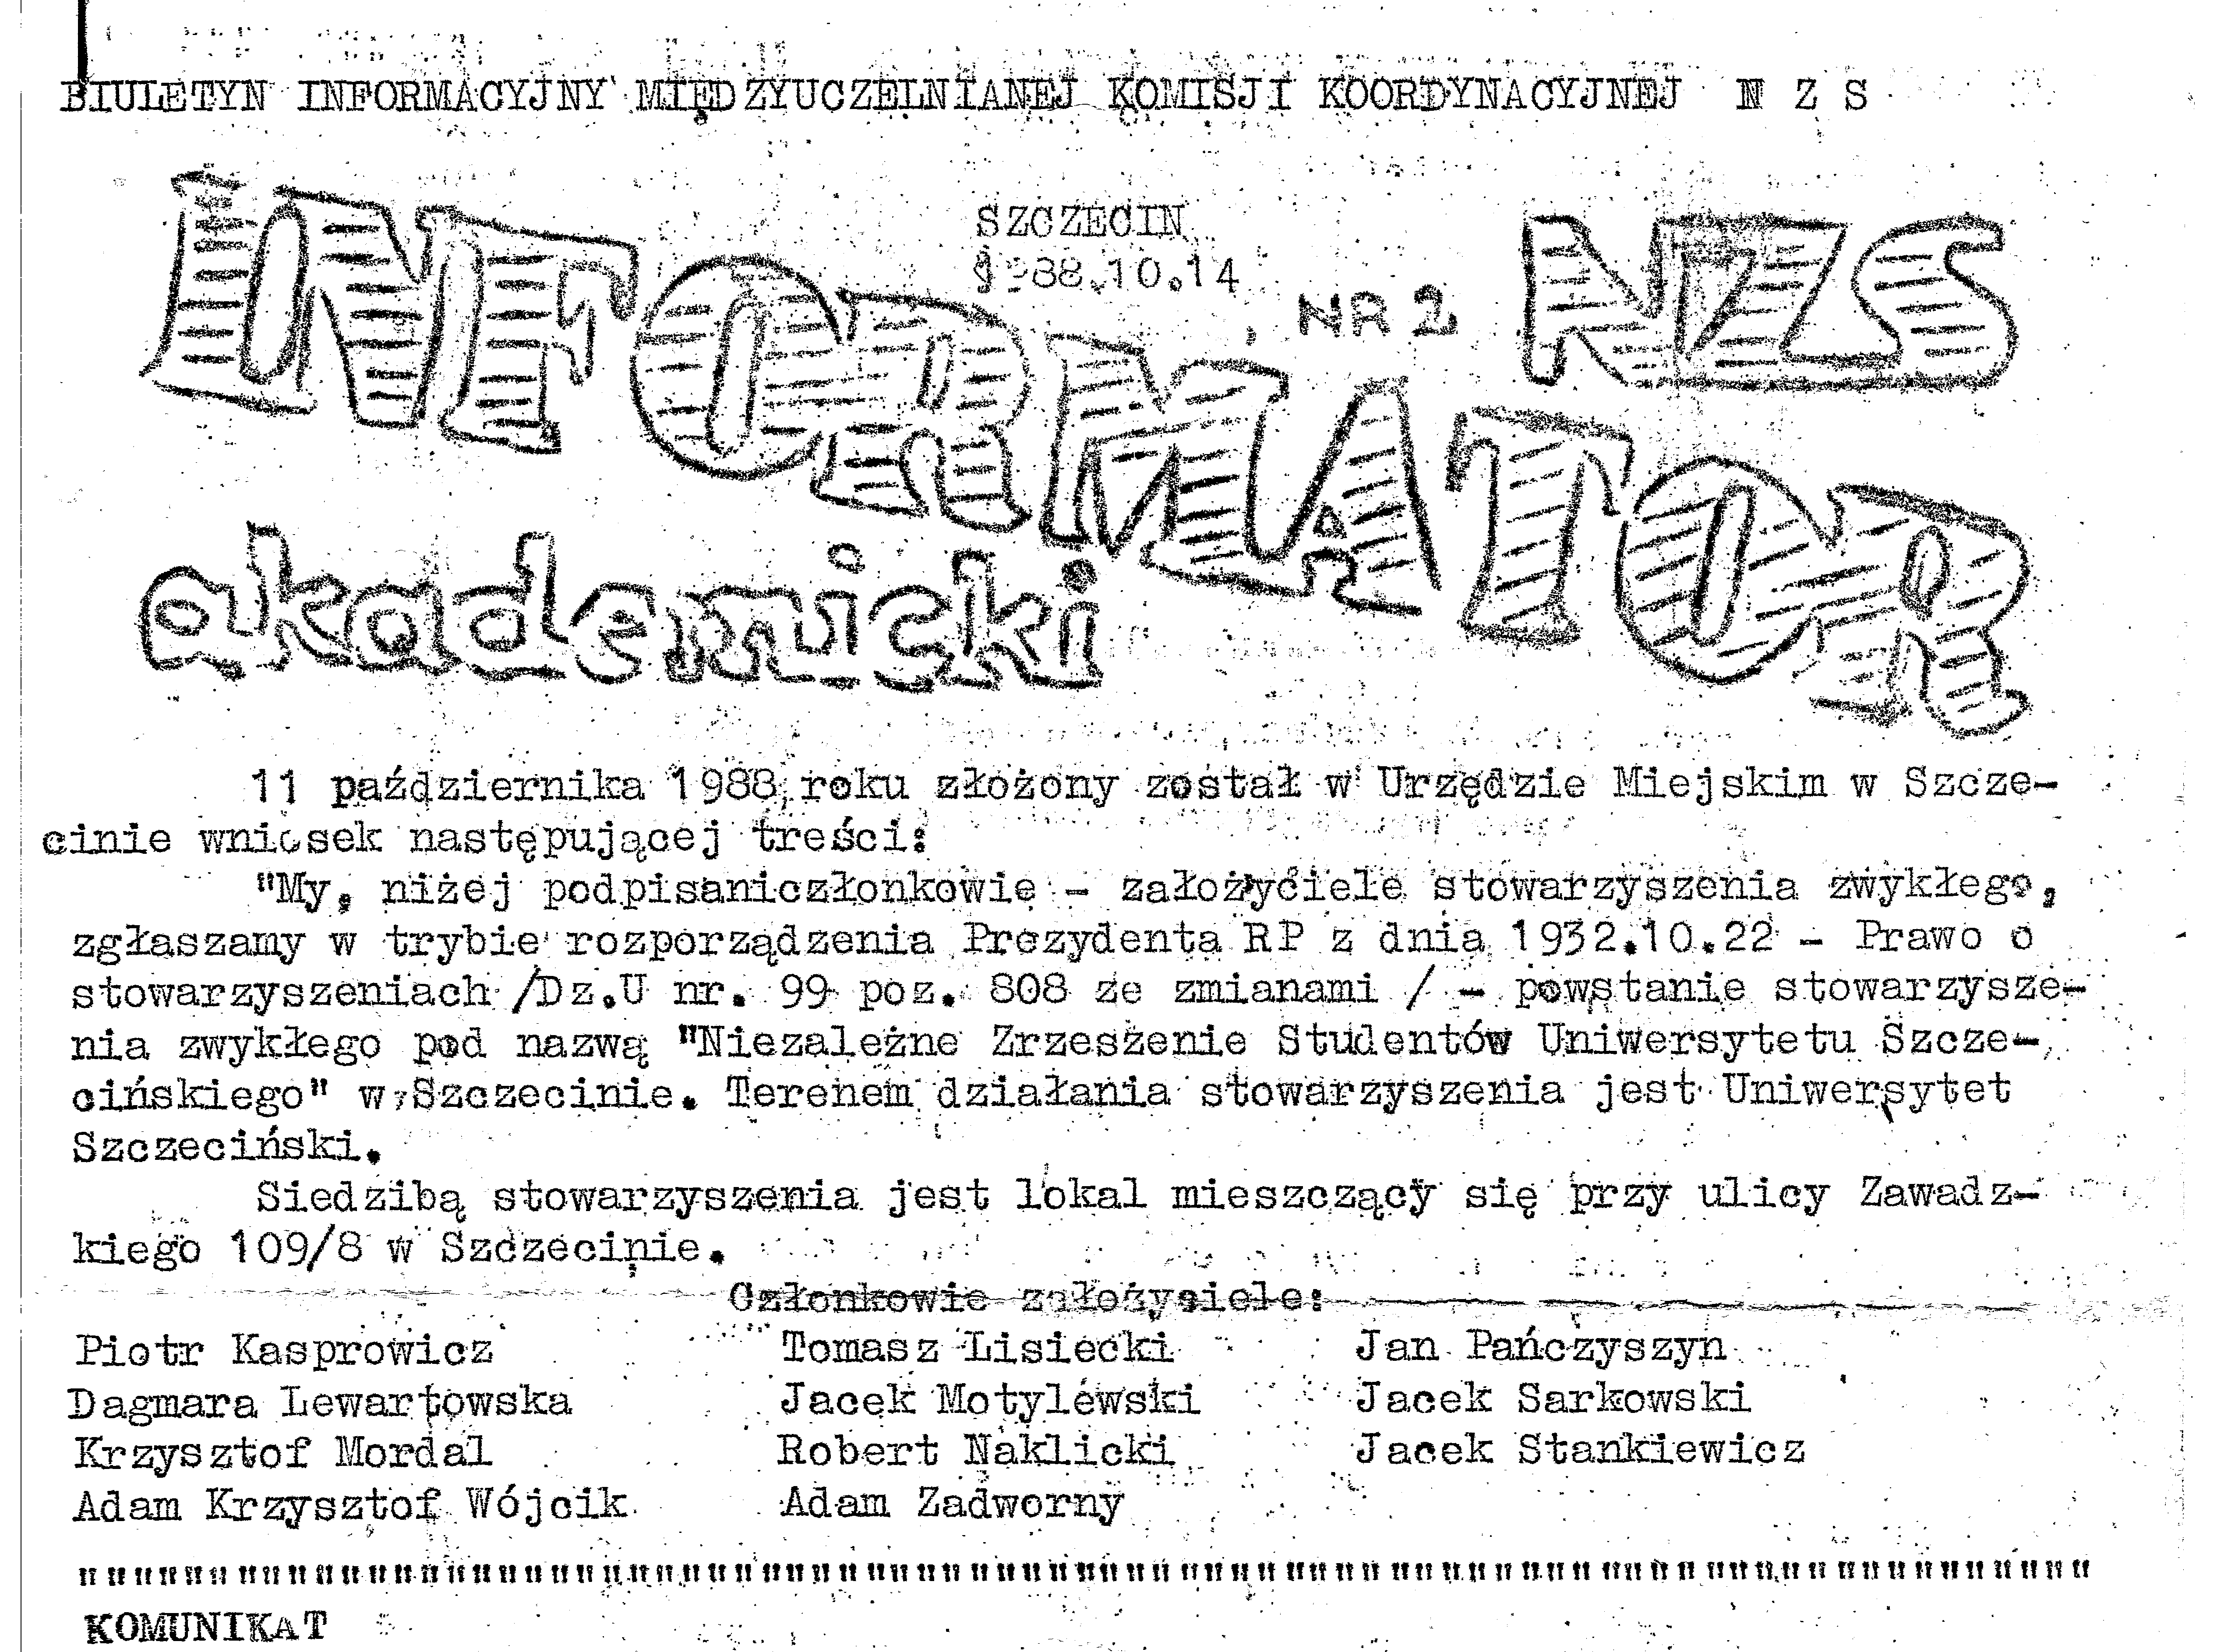 Informator Akademicki NZS nr2